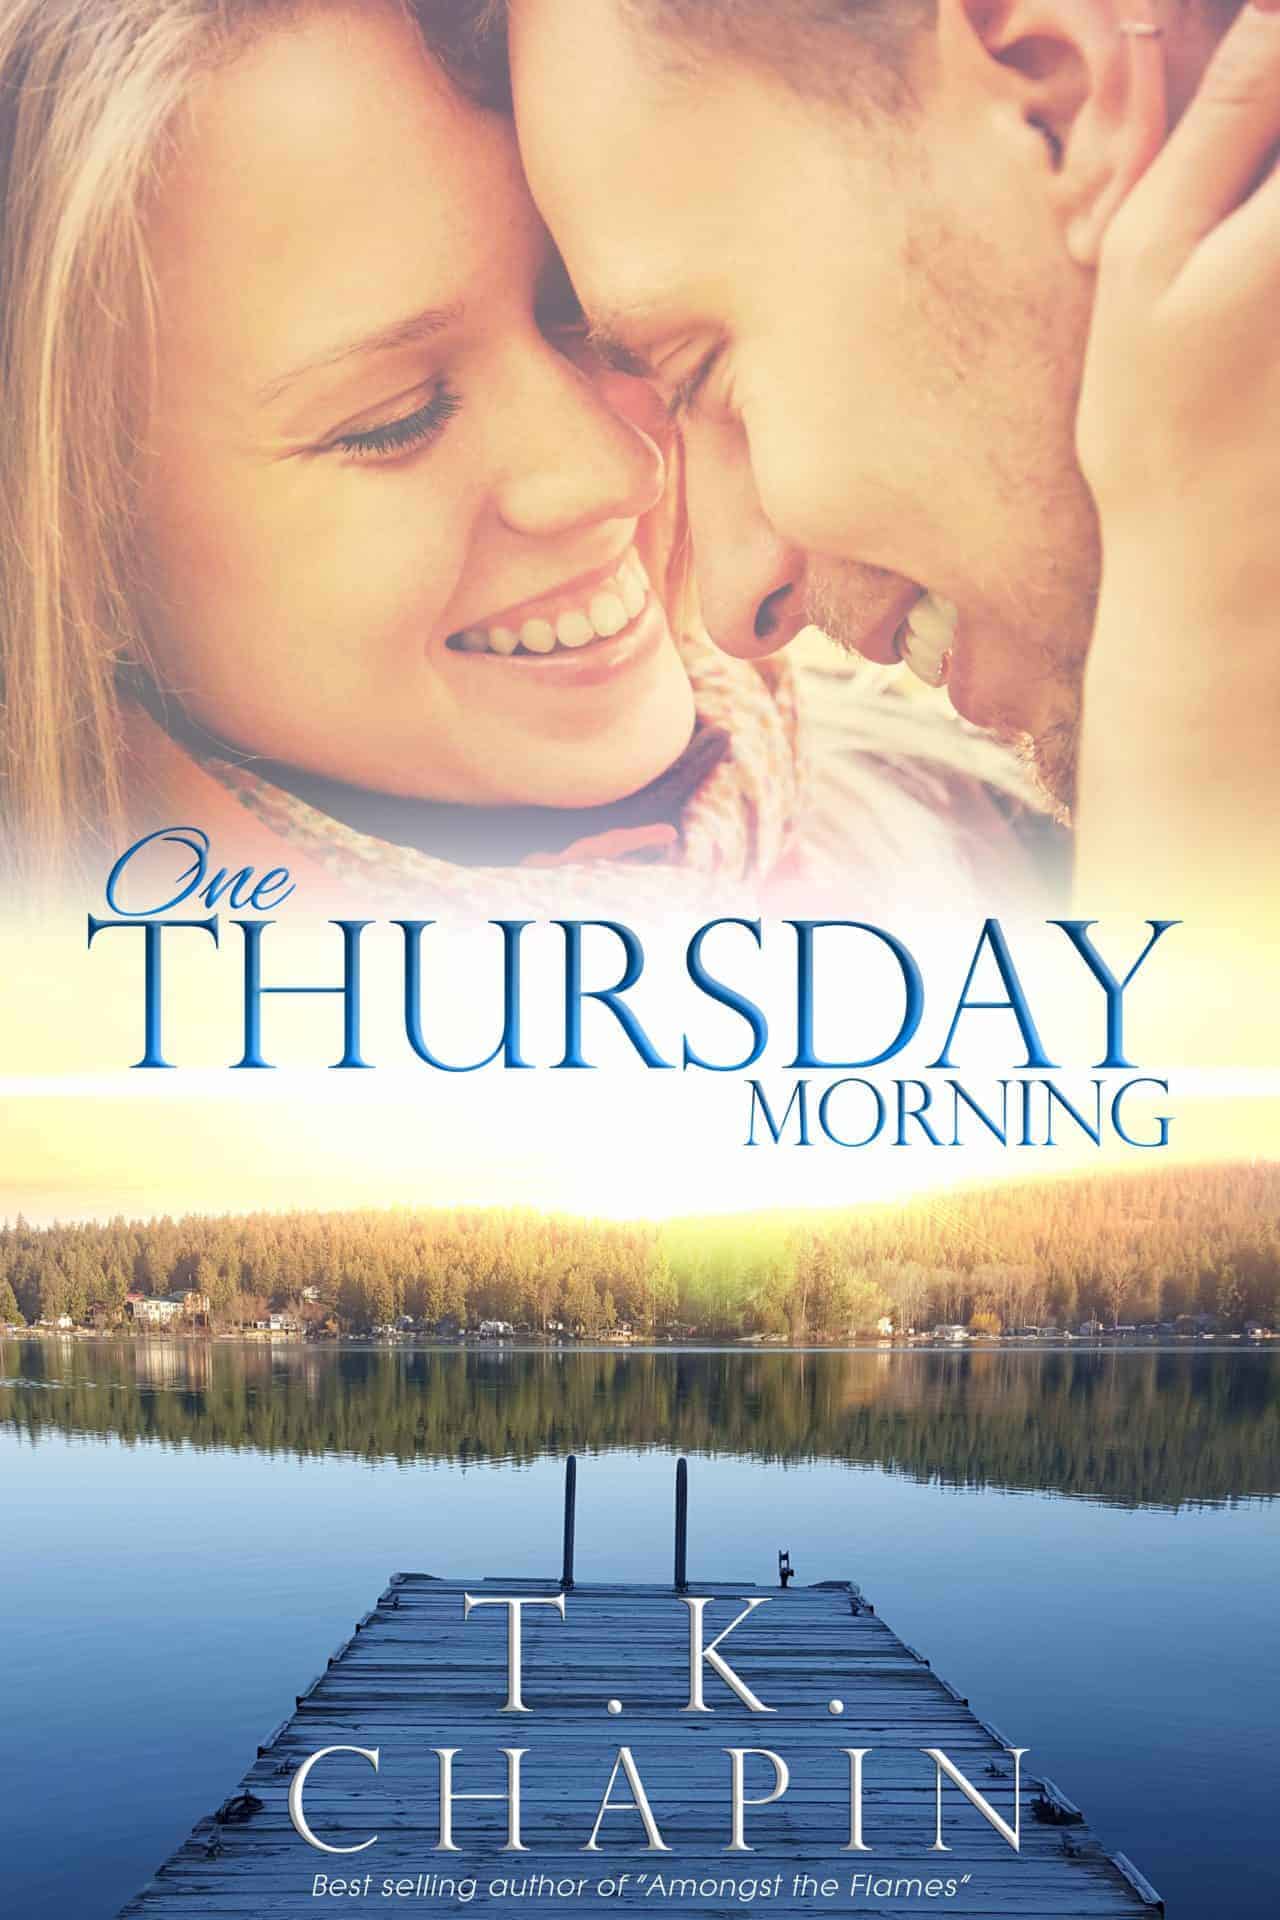 christian books on codependency - Christian Romance - One Thursday Morning